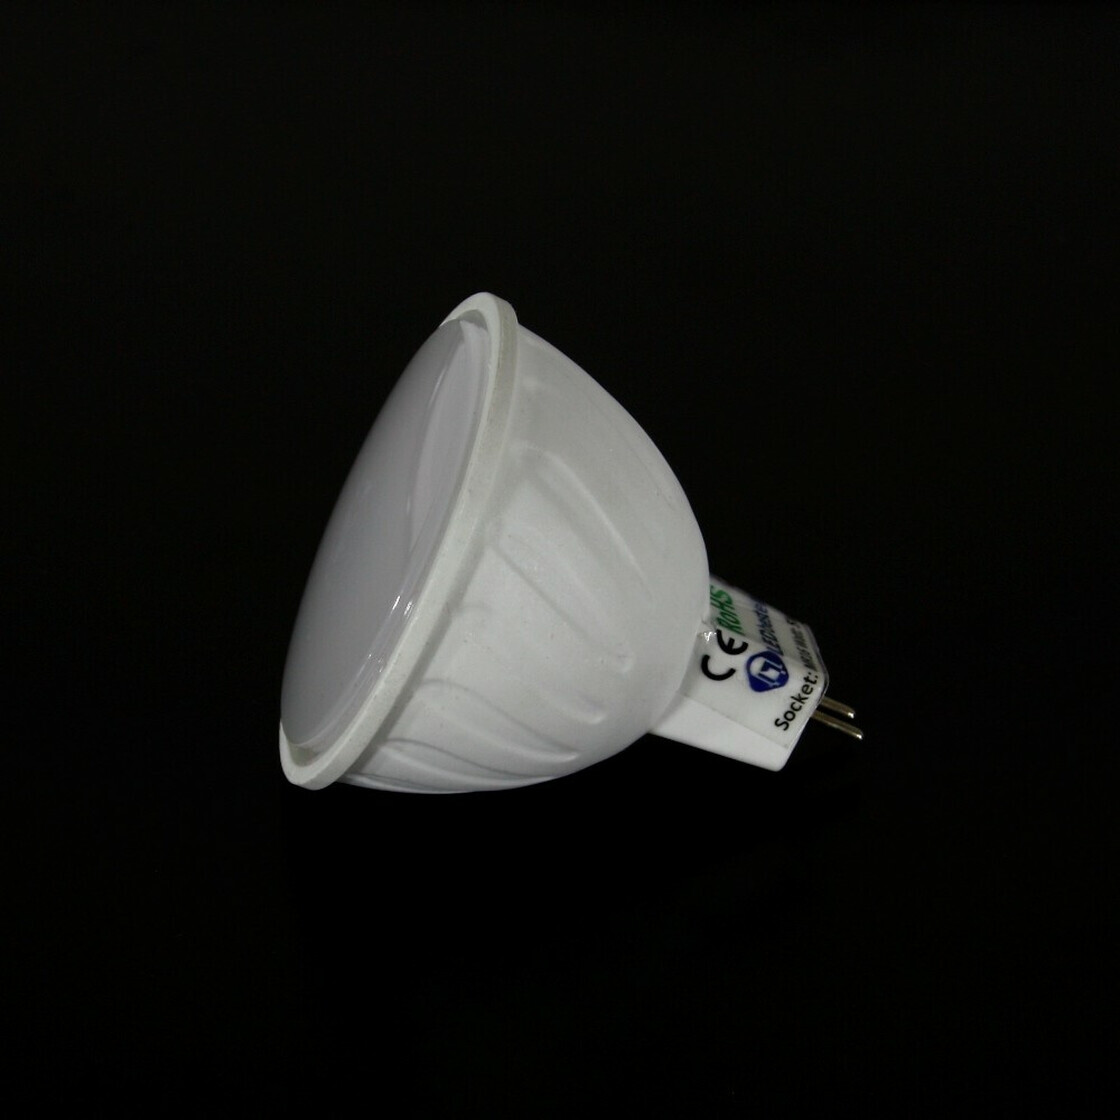 5W GU5.3 MR16 LED Leuchtmittel 3200K warmweiß Spot wie 40W Lampe milc, 3,21  €